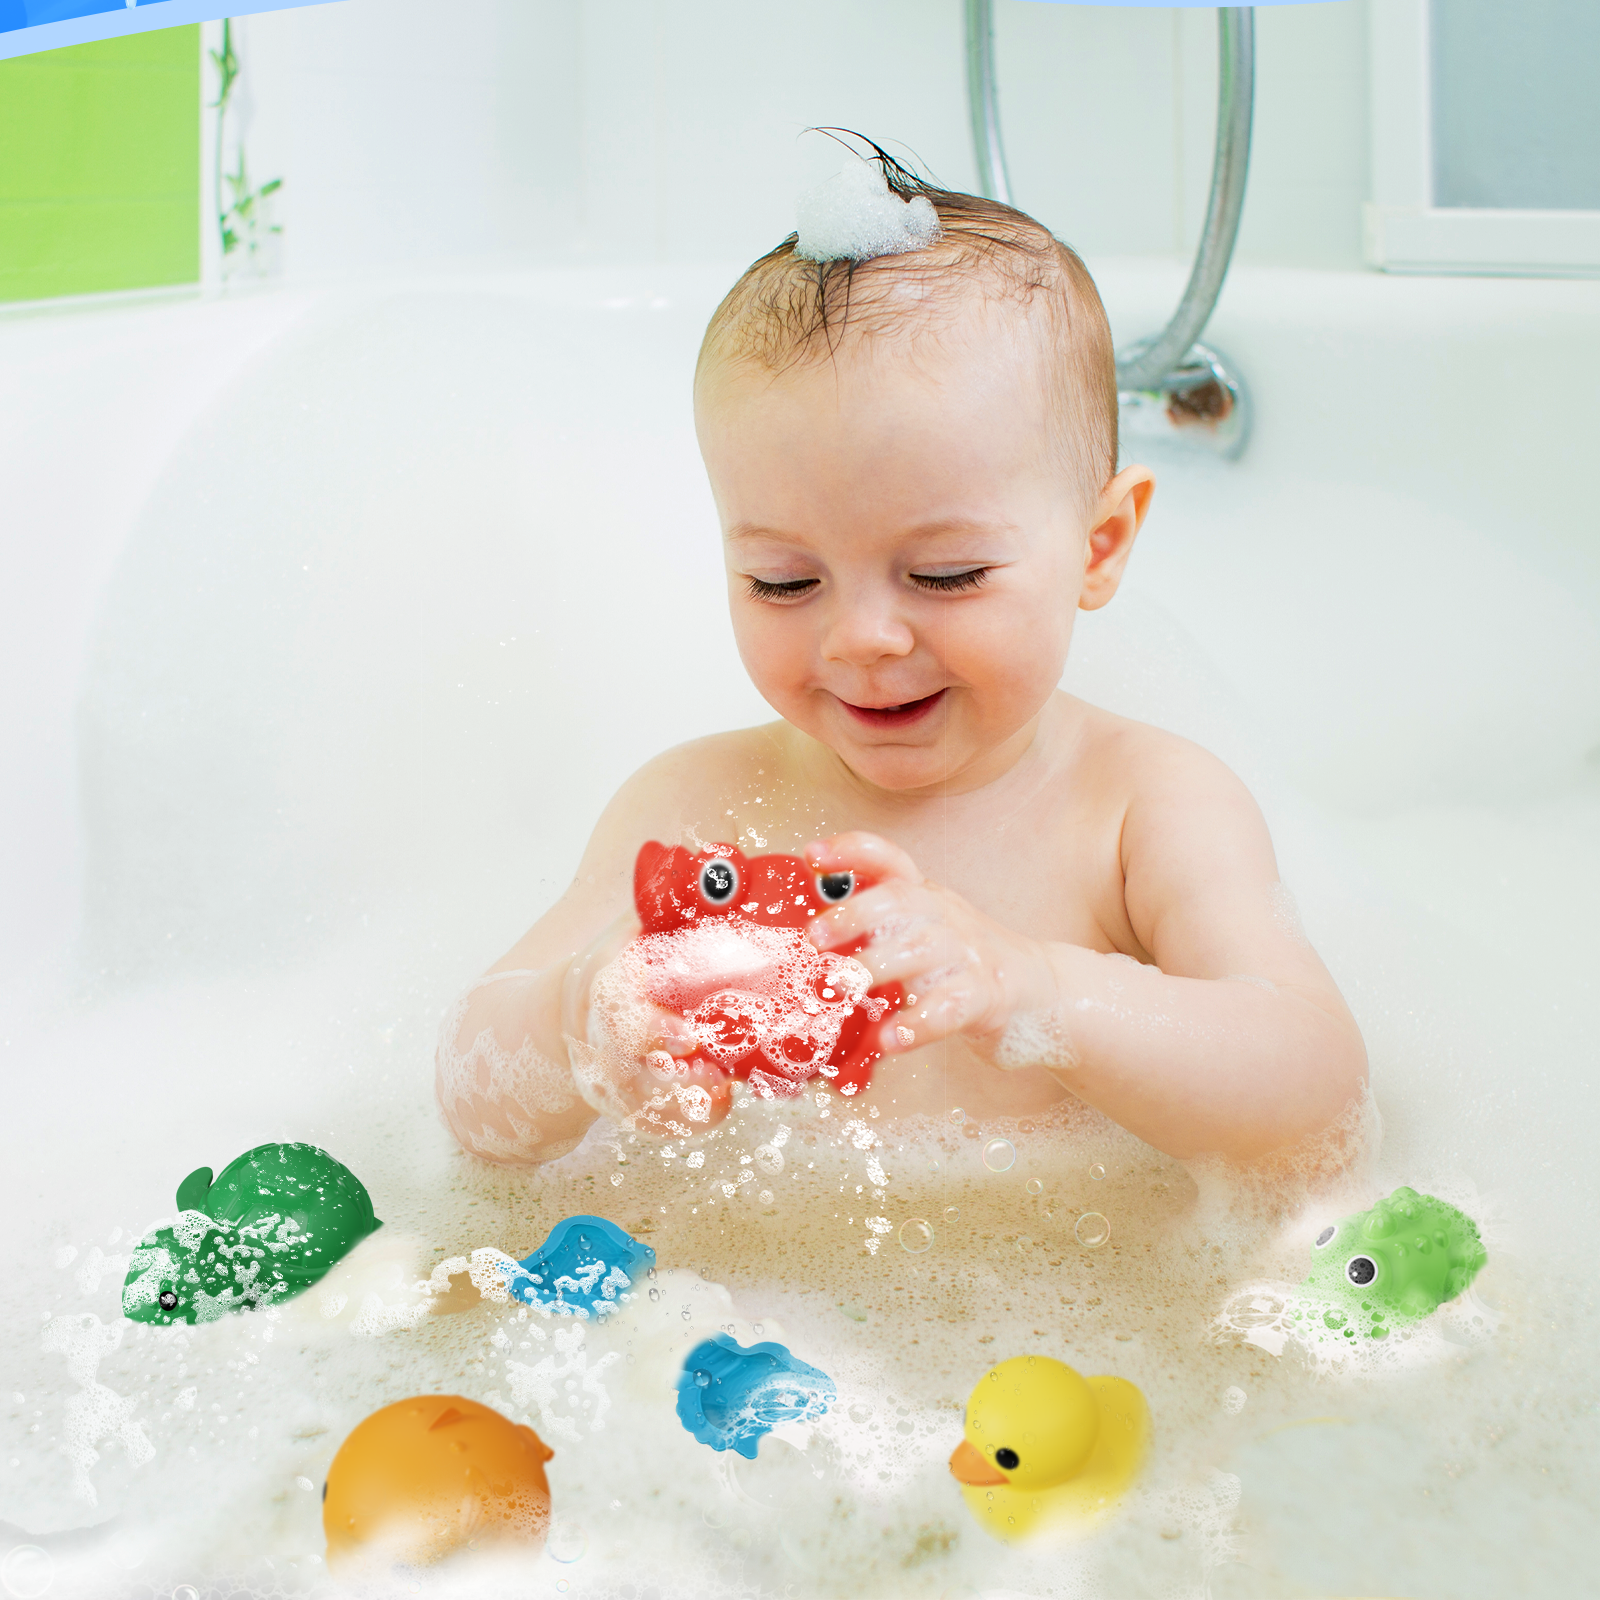 Baby Playing with Soppycid Silicone Animal Shaped Bath Toy - Soppycid Bath Toys Review - Baby Journey
